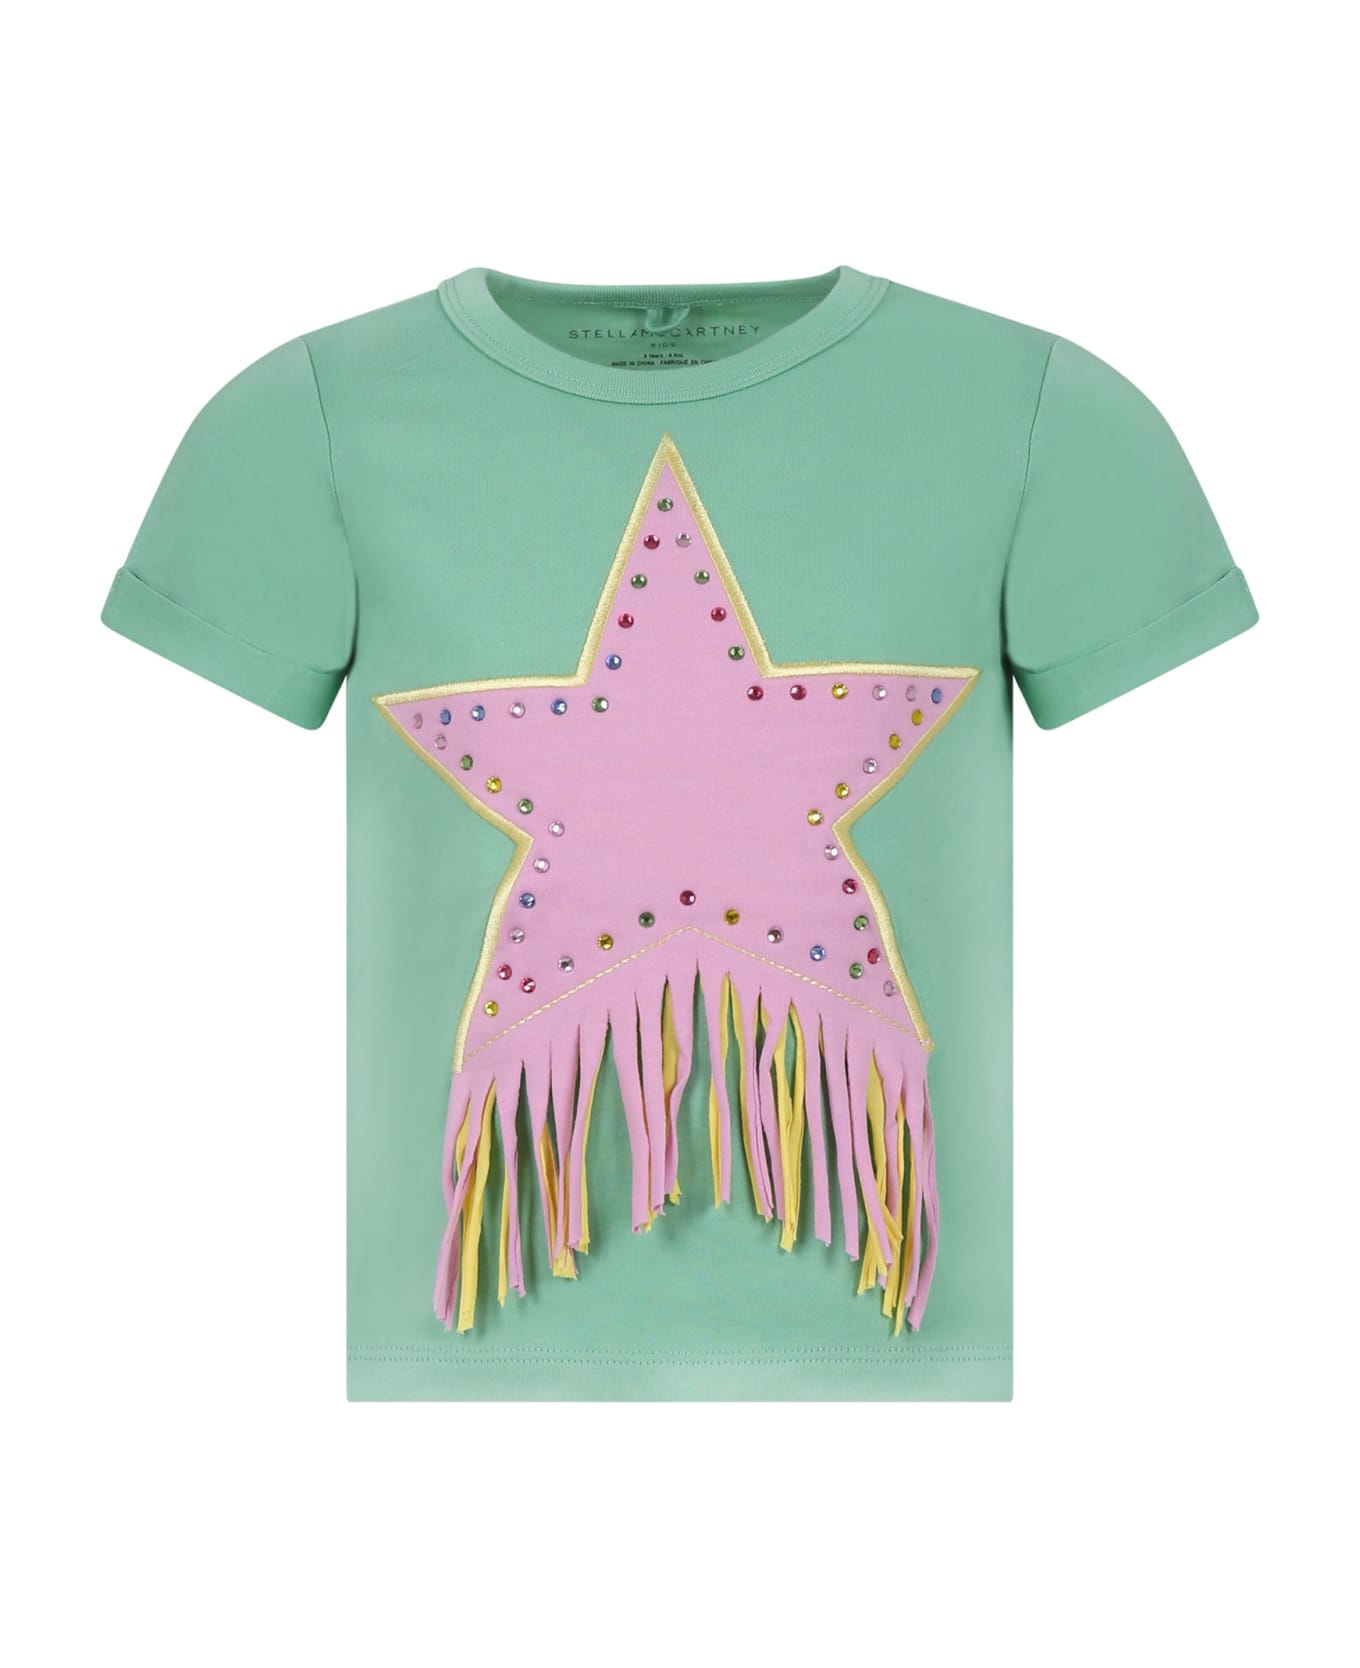 Stella McCartney Kids Green T-shirt For Girl With Star - Green